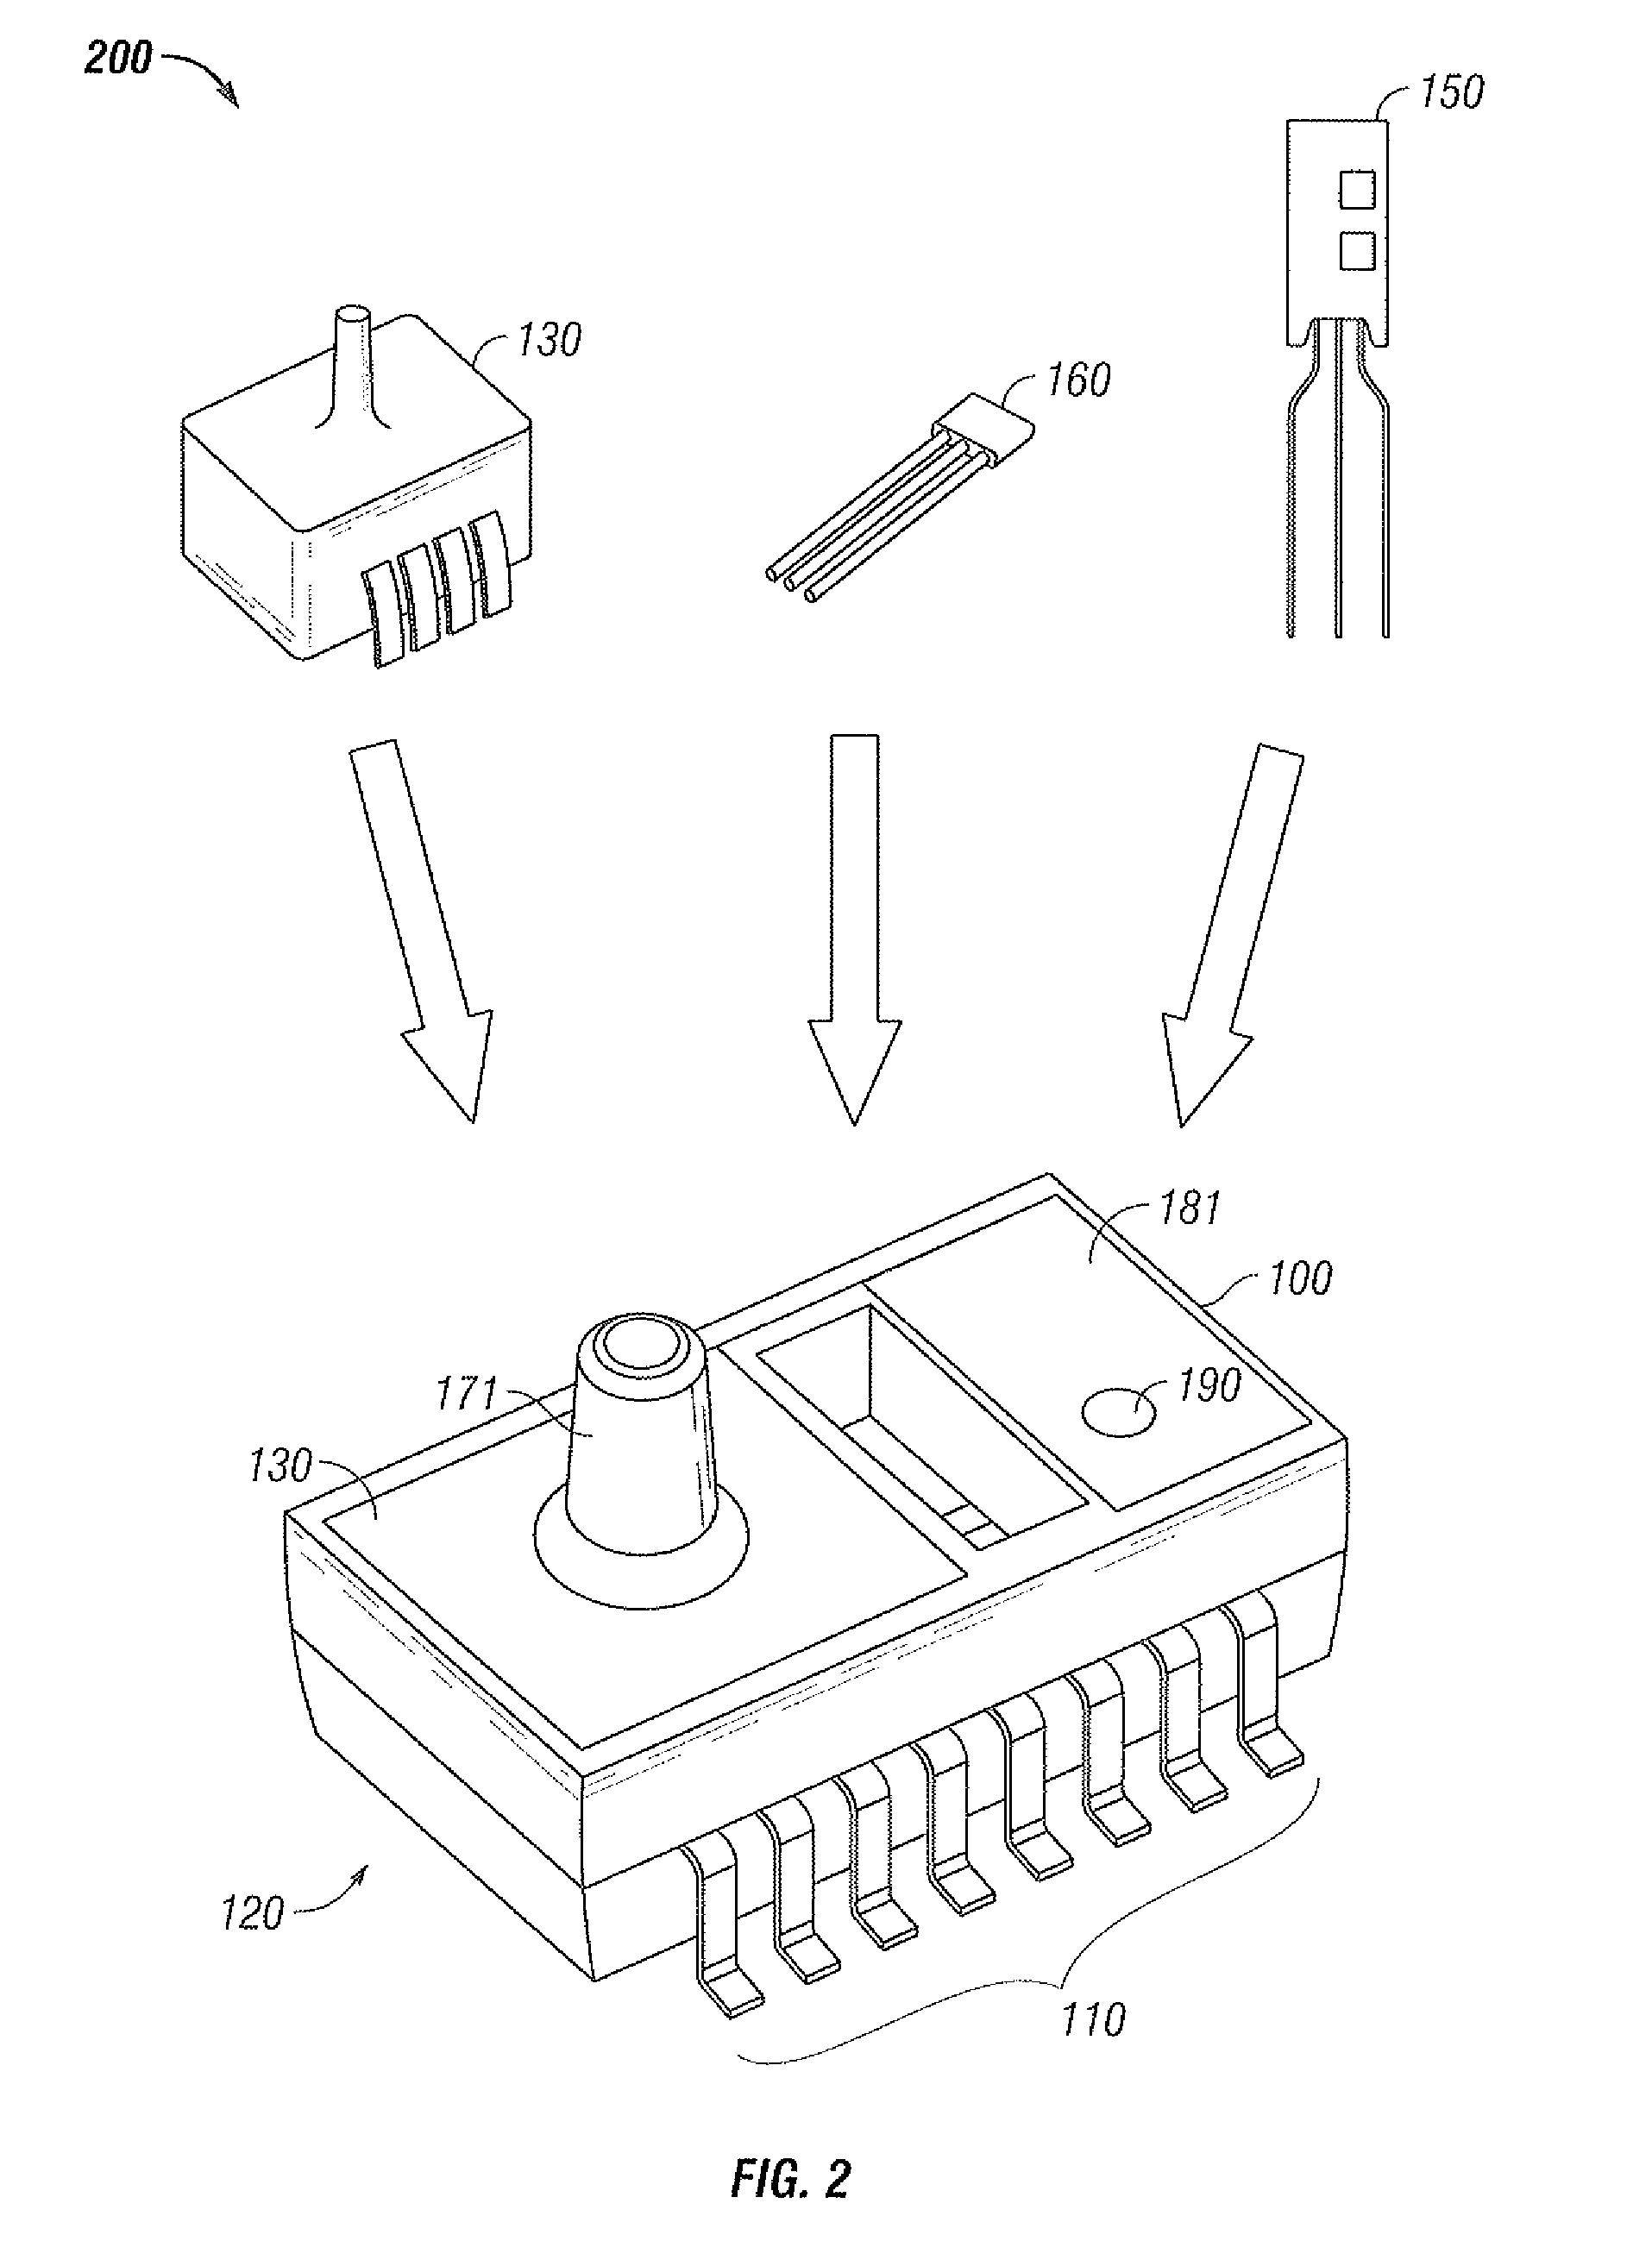 Integrated mechanical package design for combi sensor apparatus